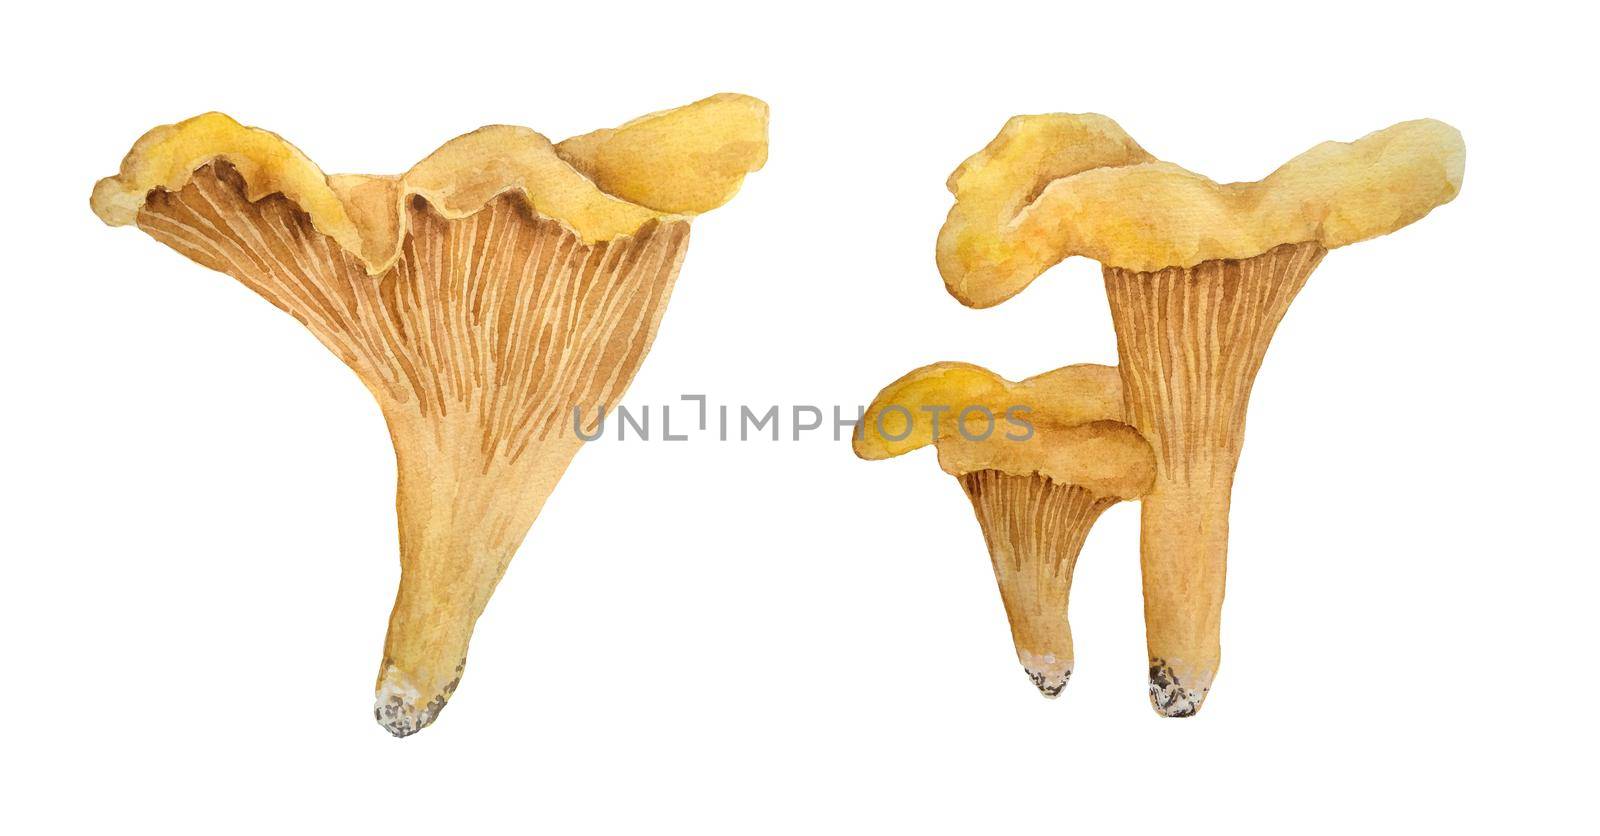 Hand drawn watercolor illustration of chanterelle cibarius edible wild fungi mushrooms. Orange yellow fungus in wood woodland forest. Natural plants nature harvest mushroom. Design realistic organic raw